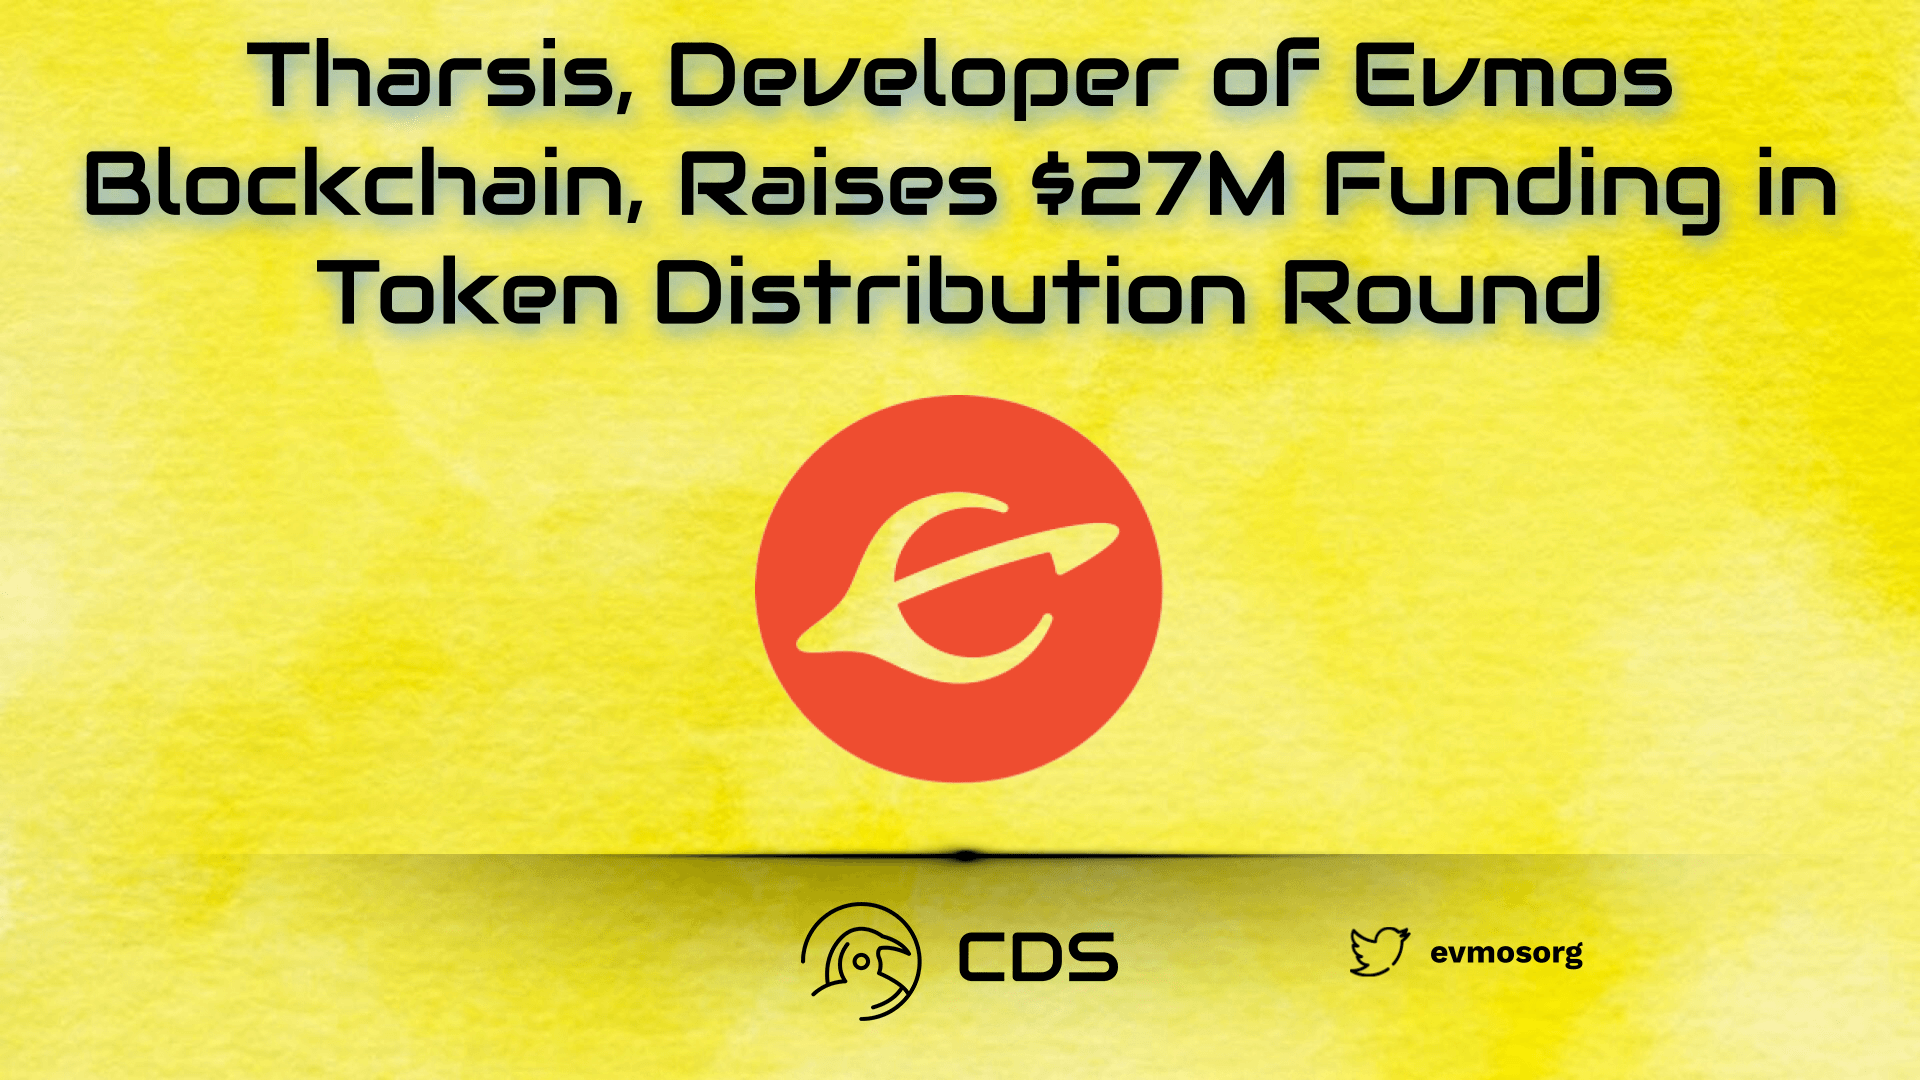 Tharsis, Developer of Evmos Blockchain, Raises $27M Funding in Token Distribution Round